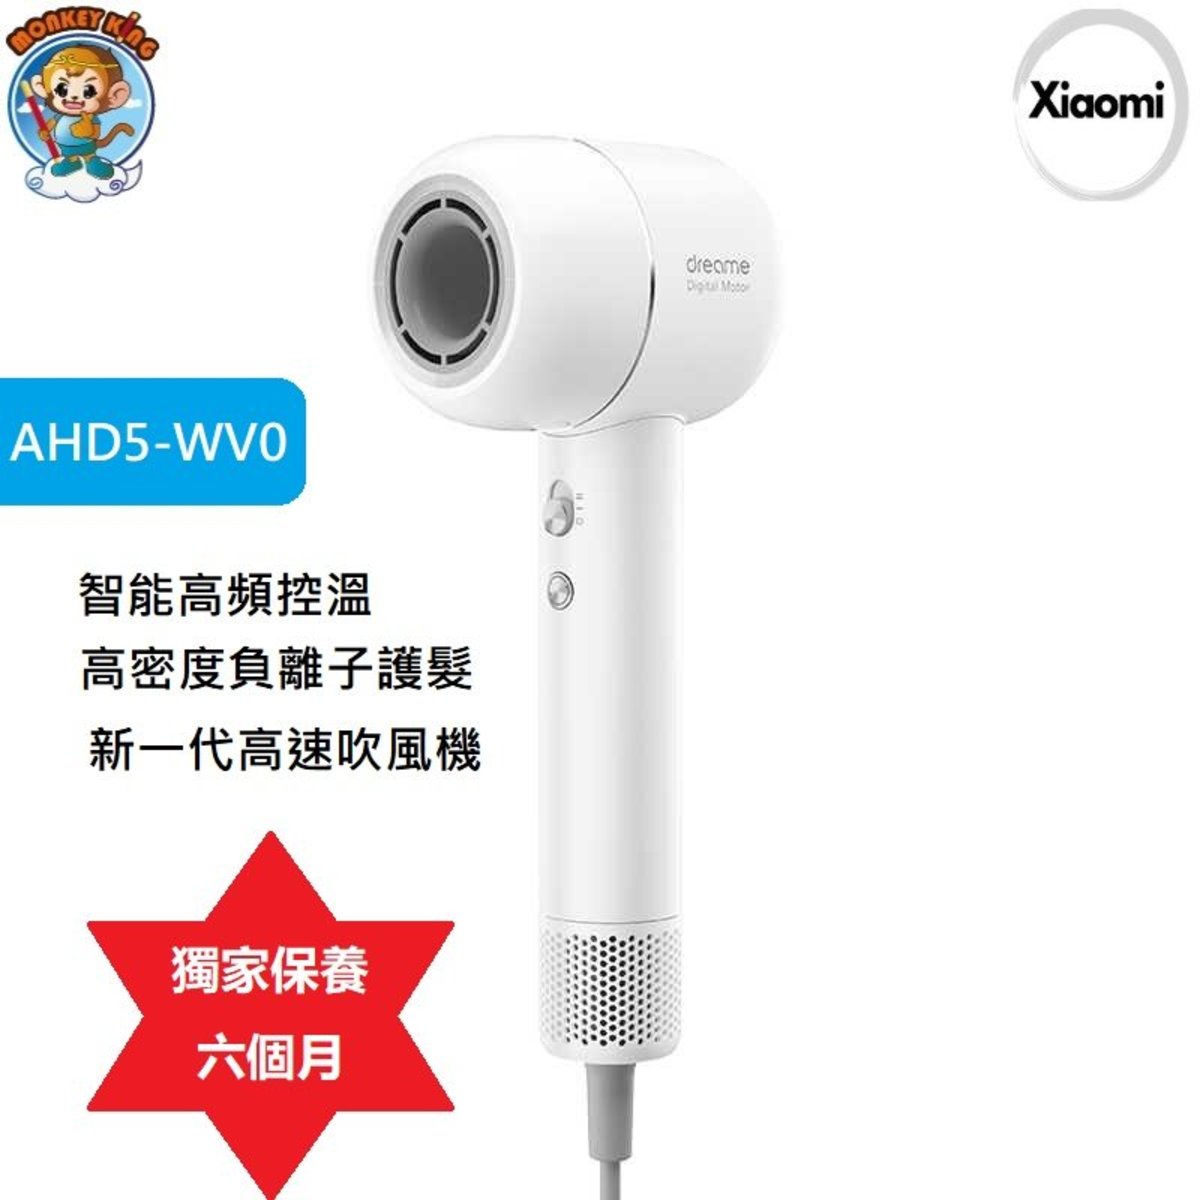 xiaomi dreame chasing intelligent temperature control hair dryer